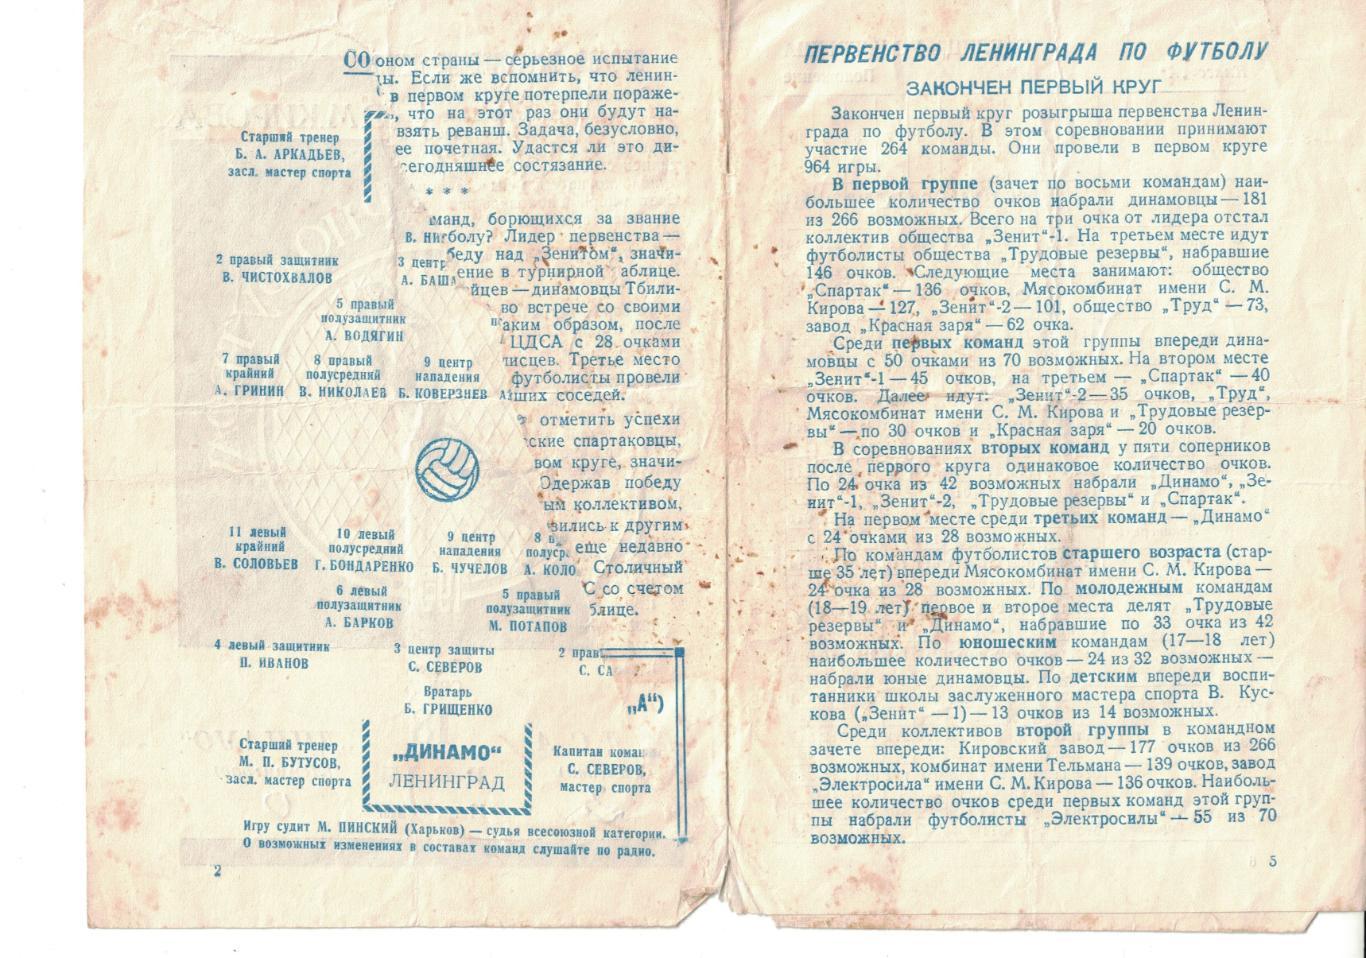 Динамо Ленинград - ЦДСА 18.07.1951 Чемпионат СССР 1